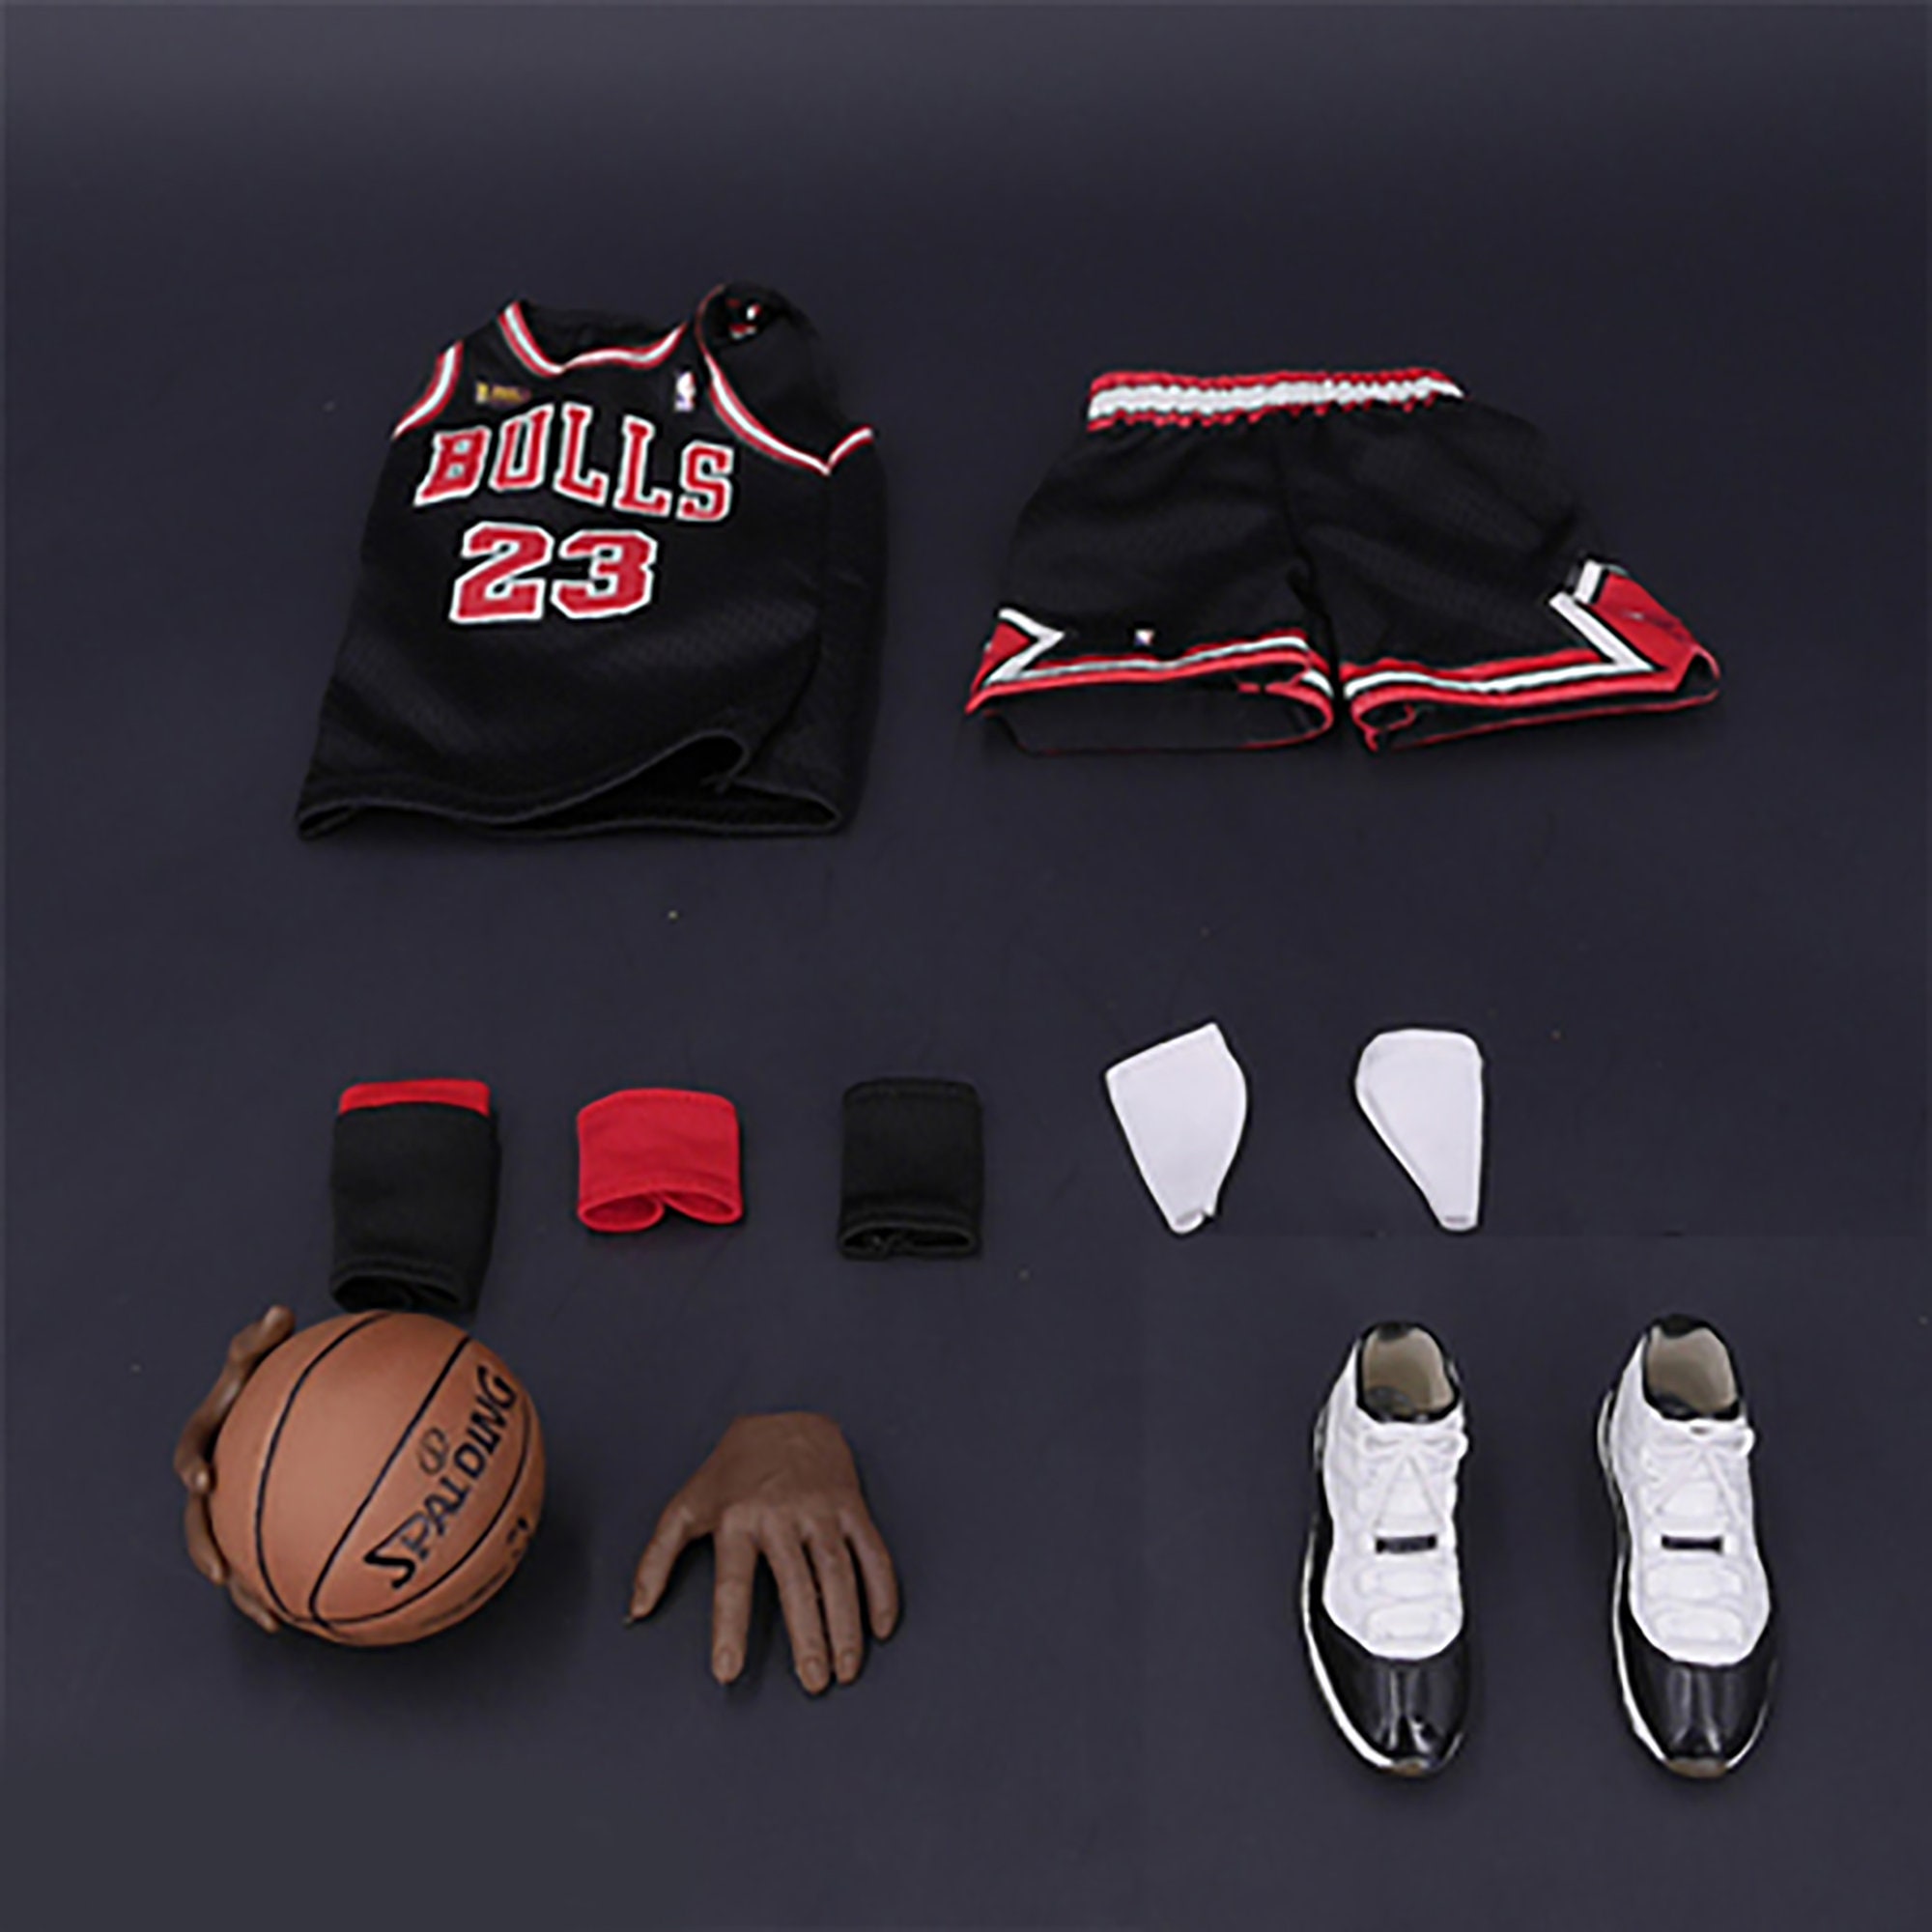 NBA Michael Jordan 16 inch Black Jersey 1:6 Action Figure